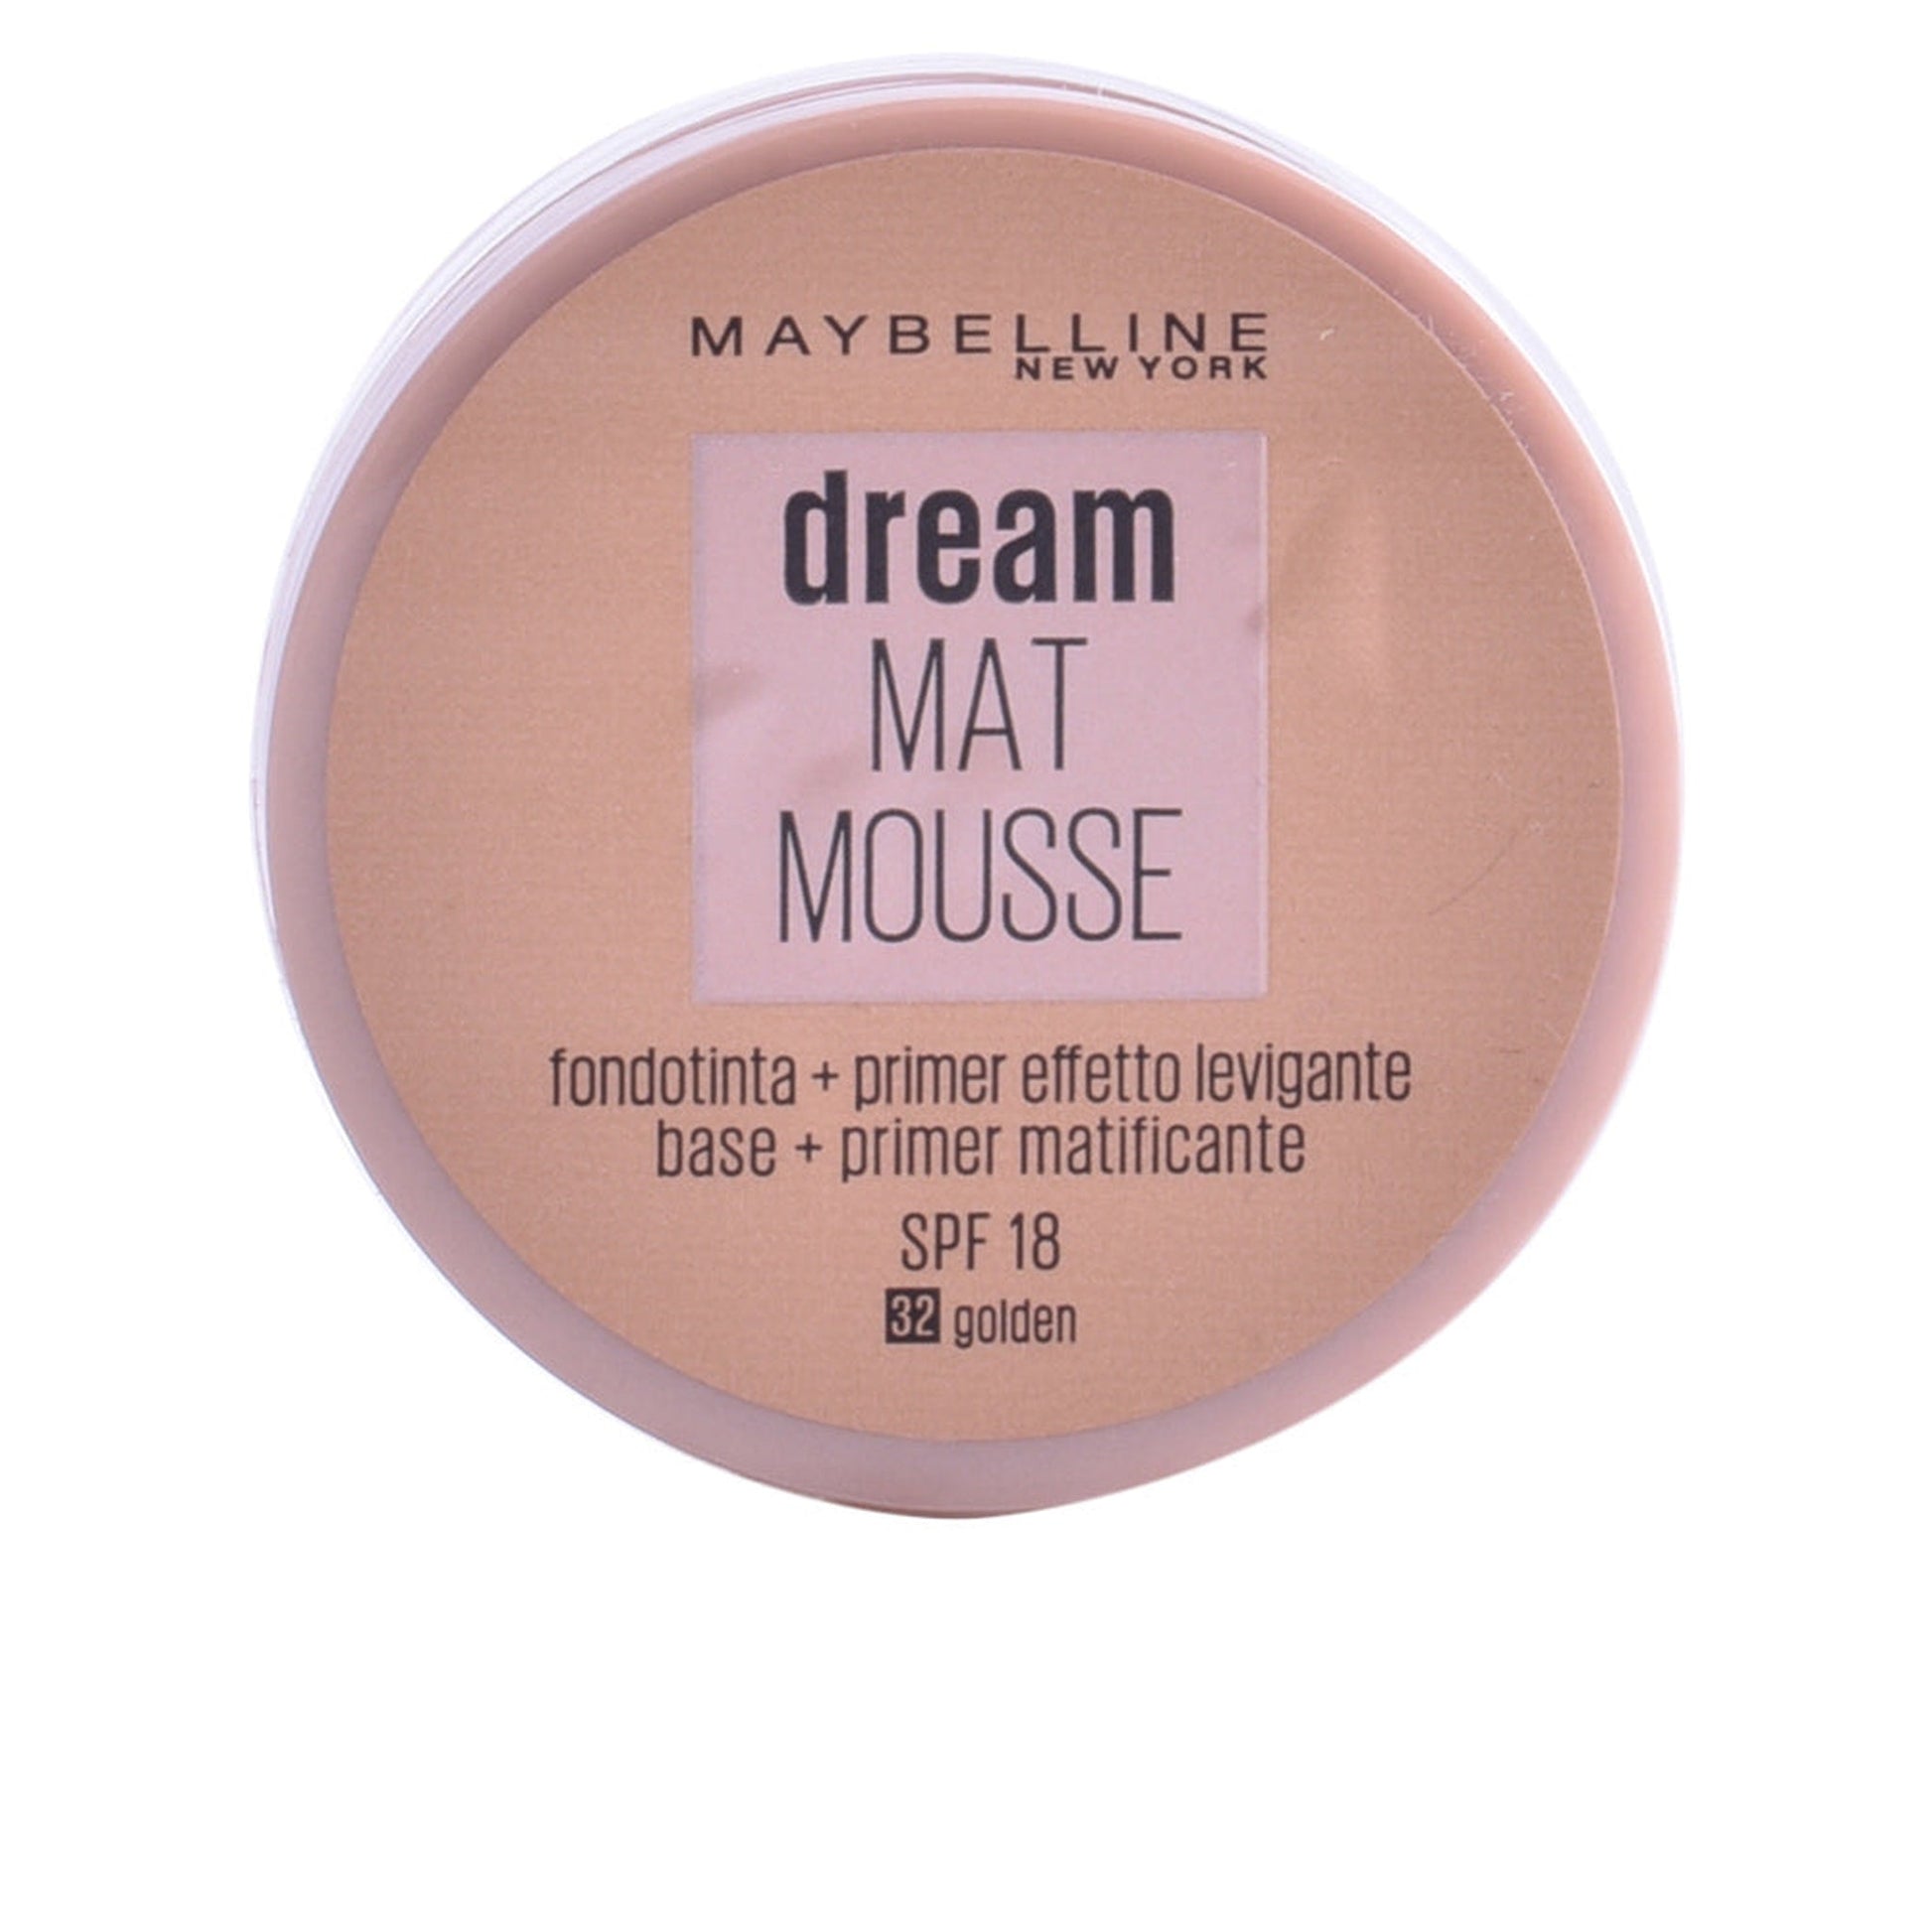 Maybelline Foamy Makeup Base Dream Matte Mousse 032 Golden-Maybelline-BeautyNmakeup.co.uk